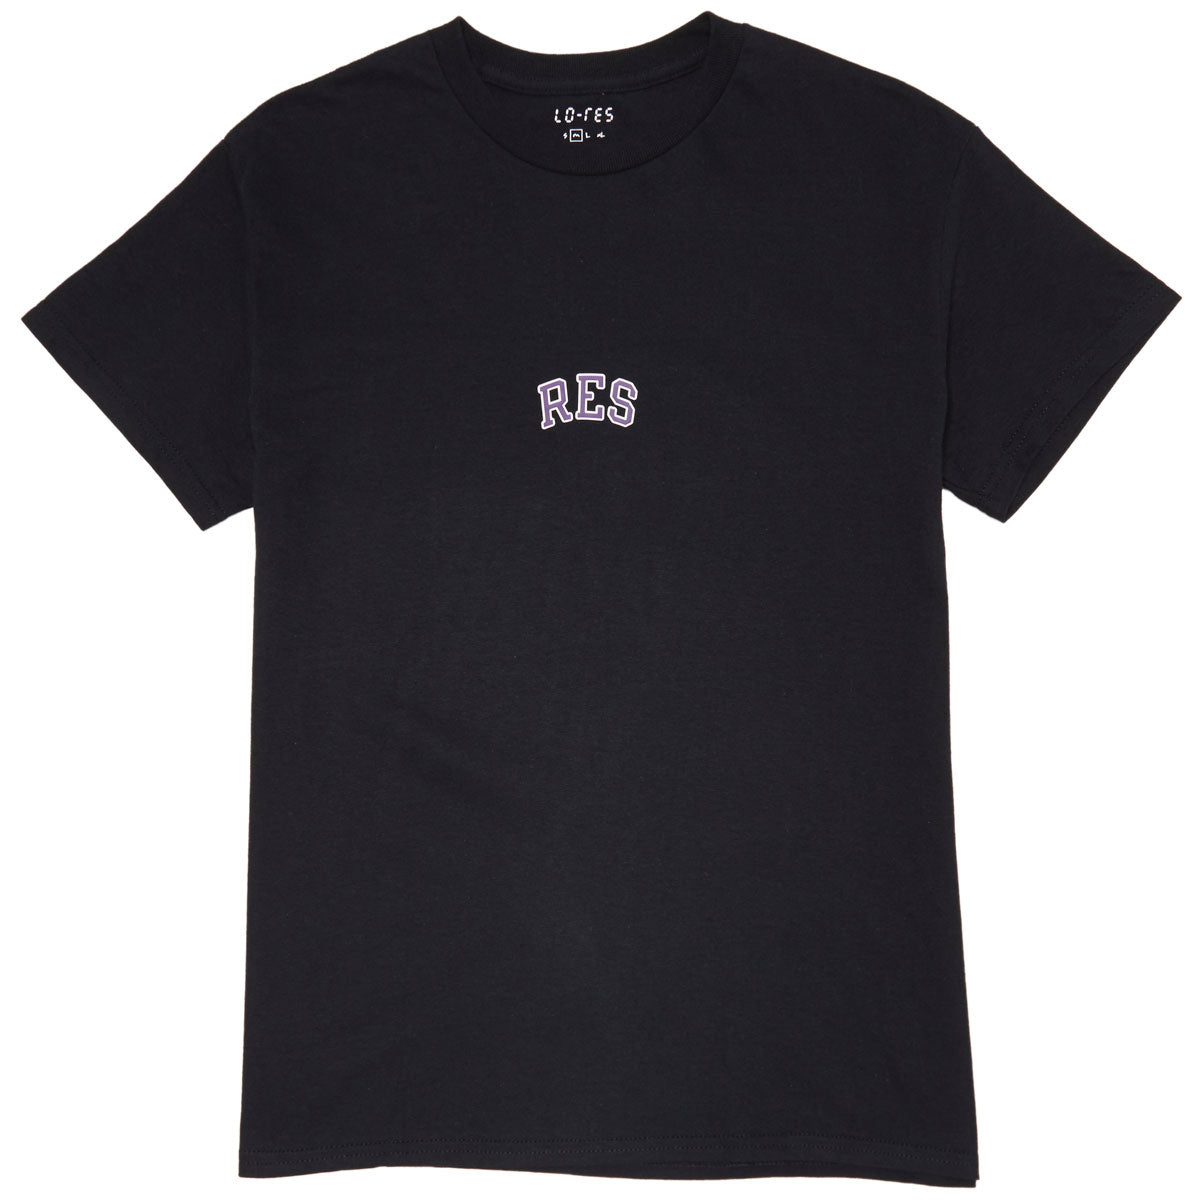 Lo-Res Ball T-Shirt - Black image 1